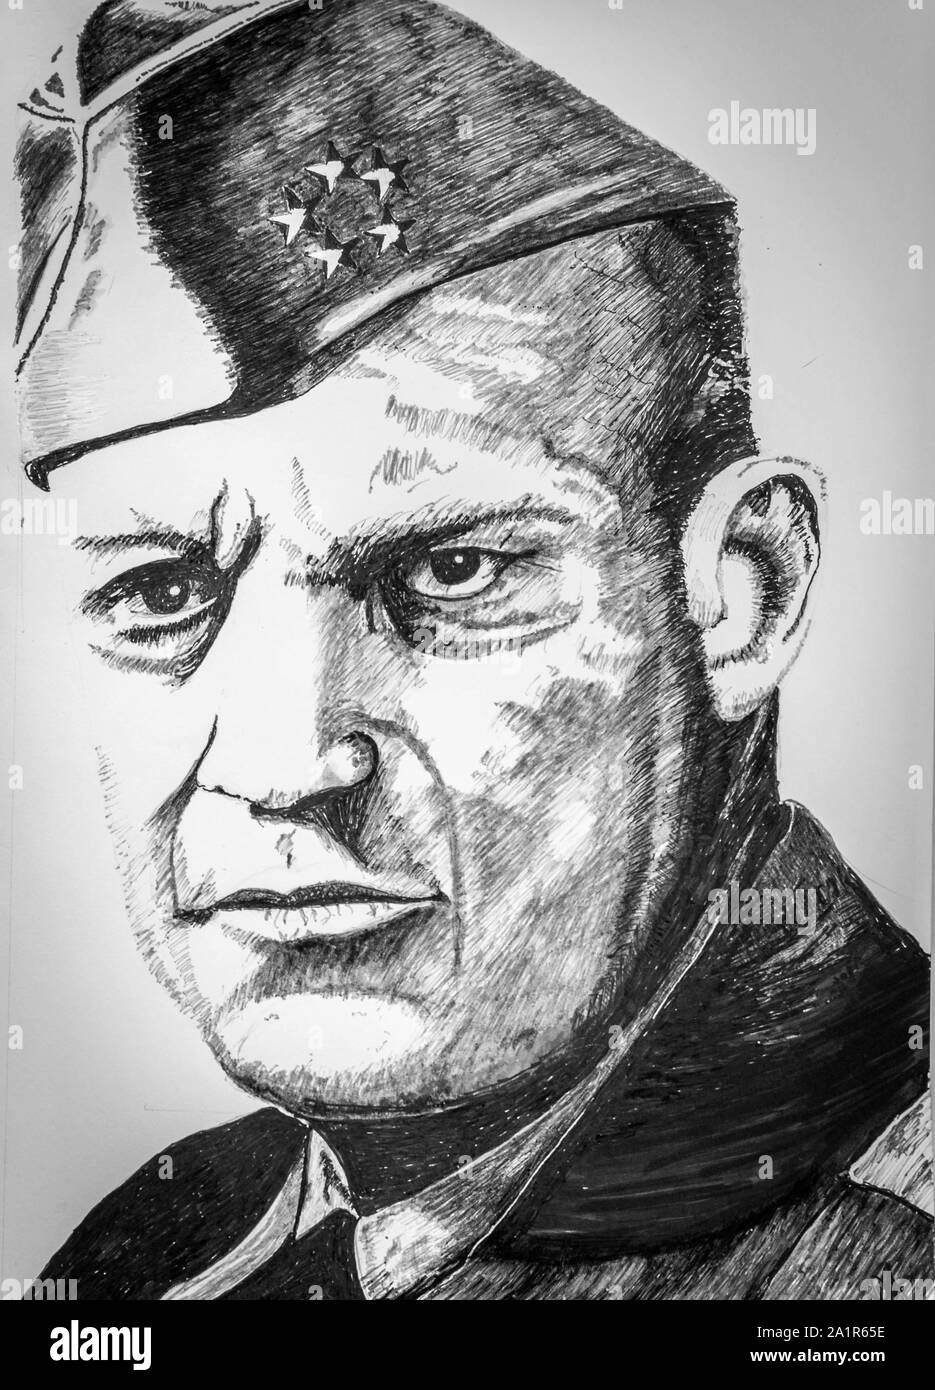 Dwight D Eisenhower in military uniform Stock Photo